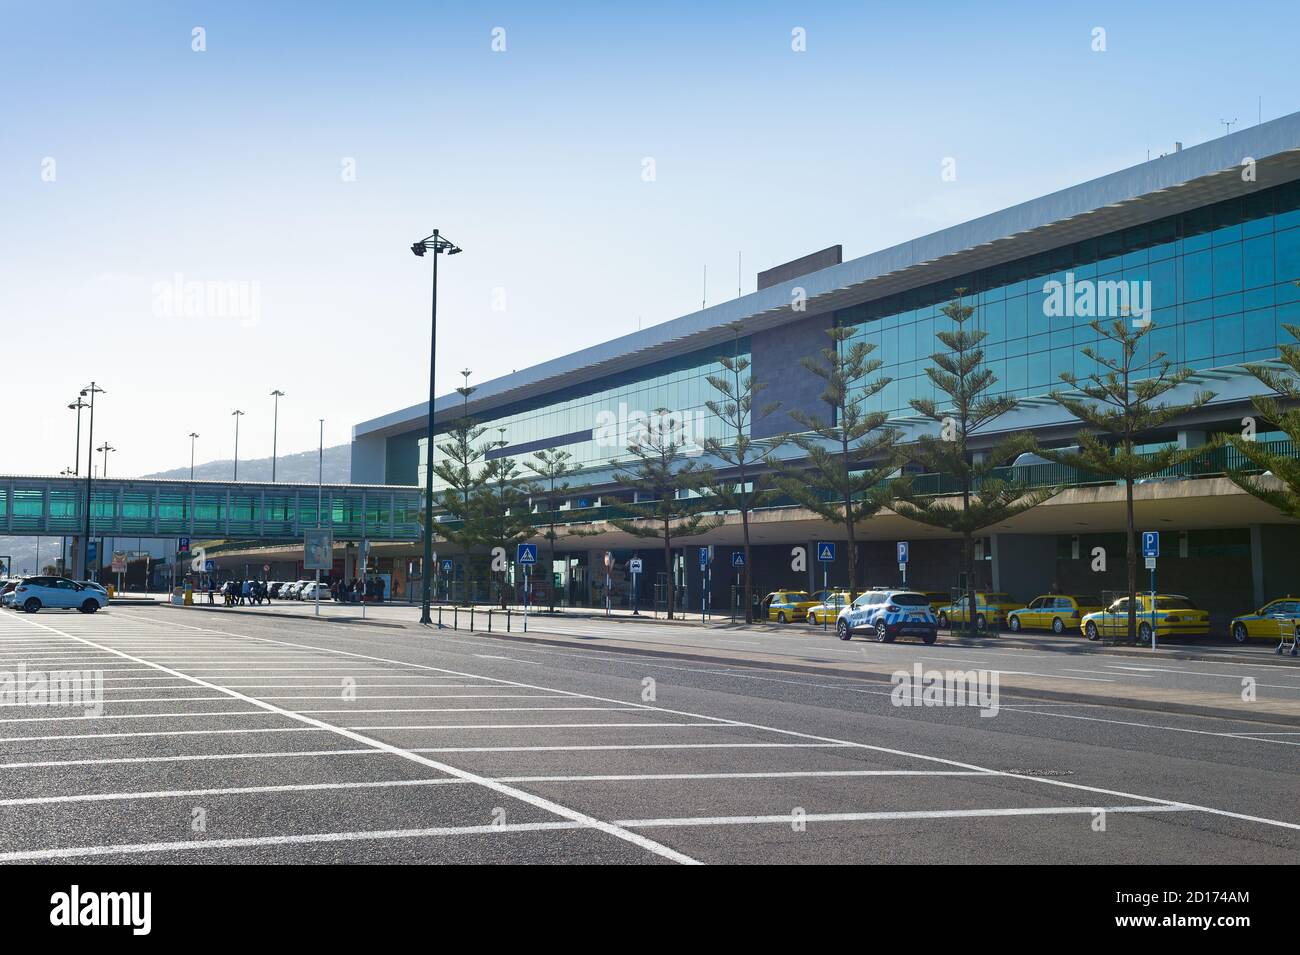 FUNCHAL, MADEIRA, PORTUGAL - JAN 30, 2020: View of Cristiano Ronaldo International Airport terminal - main airport of Madeira island Stock Photo